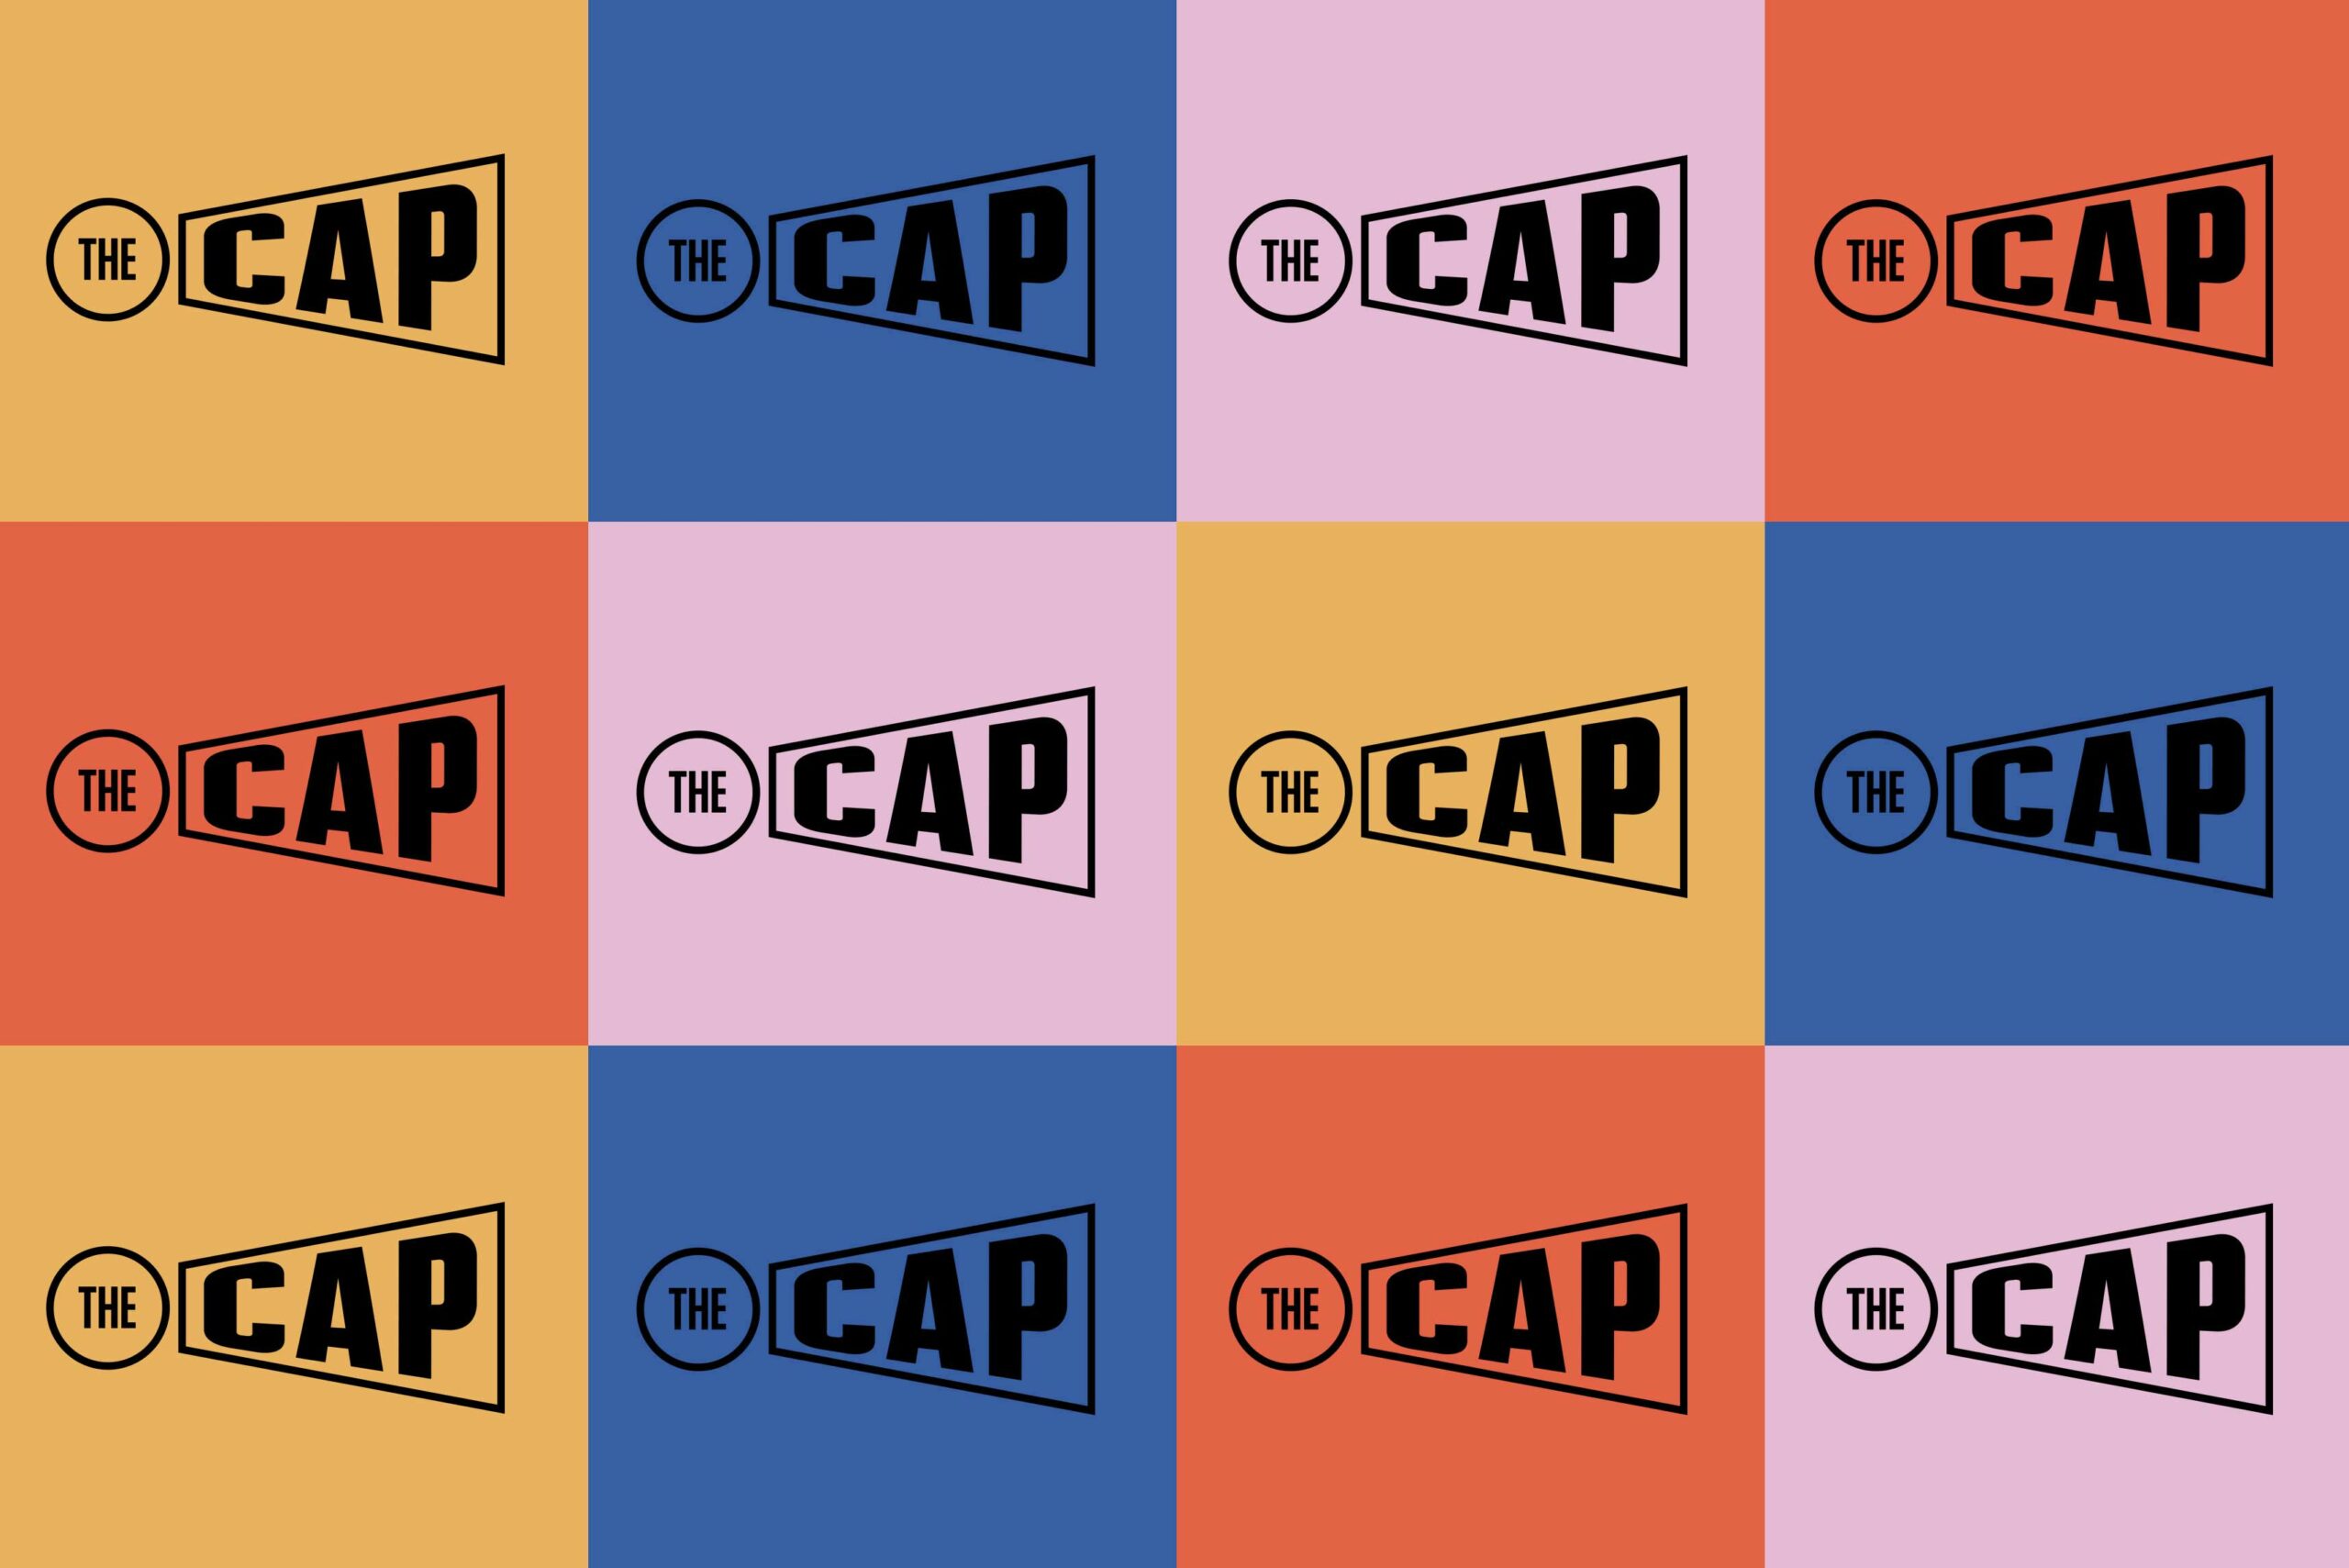 The Cap branding